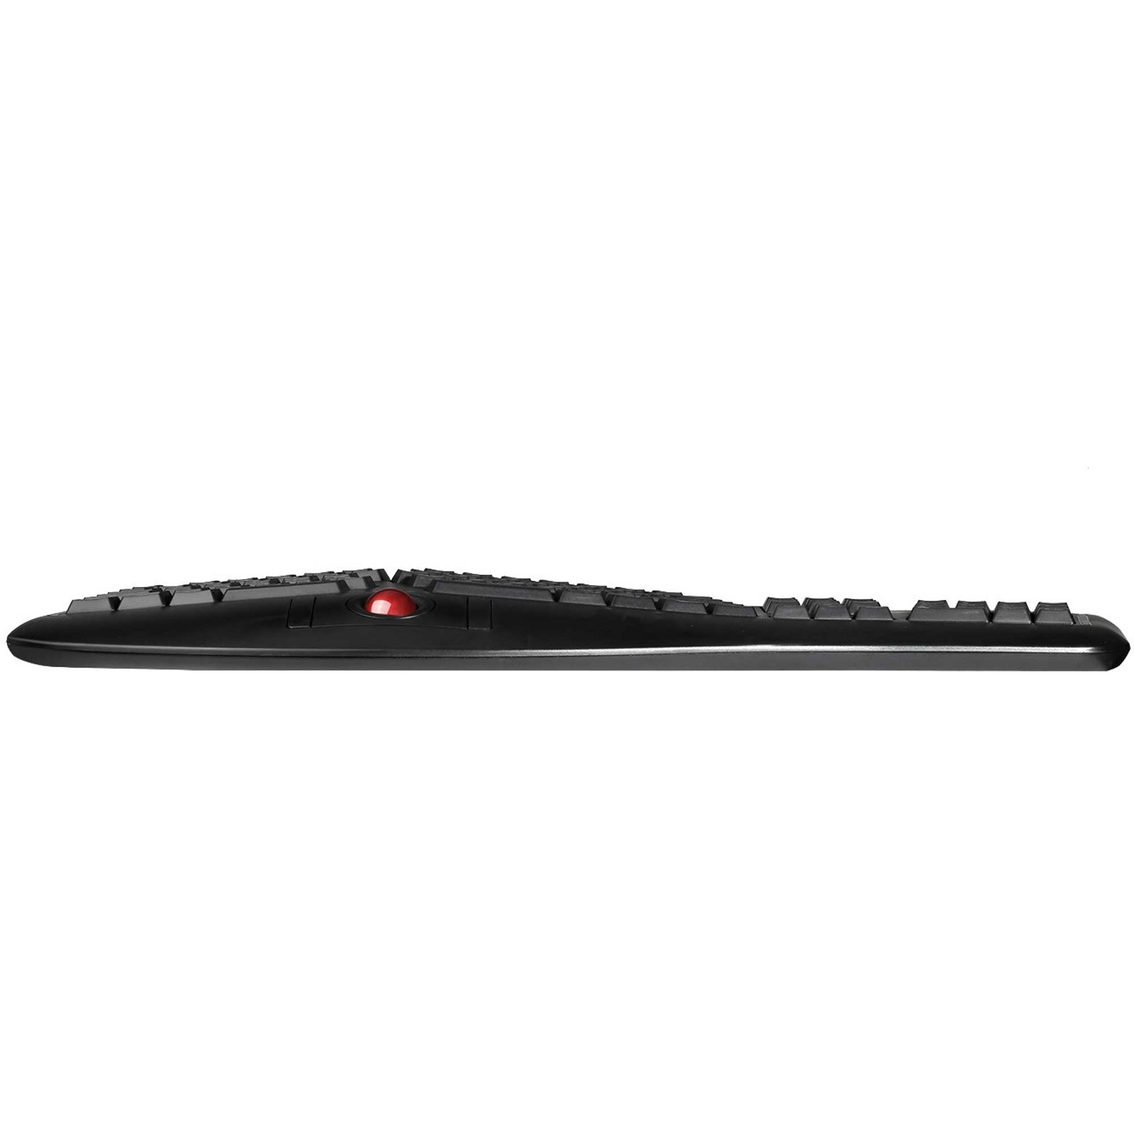 Adesso Tru-Form 3500 2.4GHz Wireless Ergonomic Trackball Keyboard - Image 2 of 3